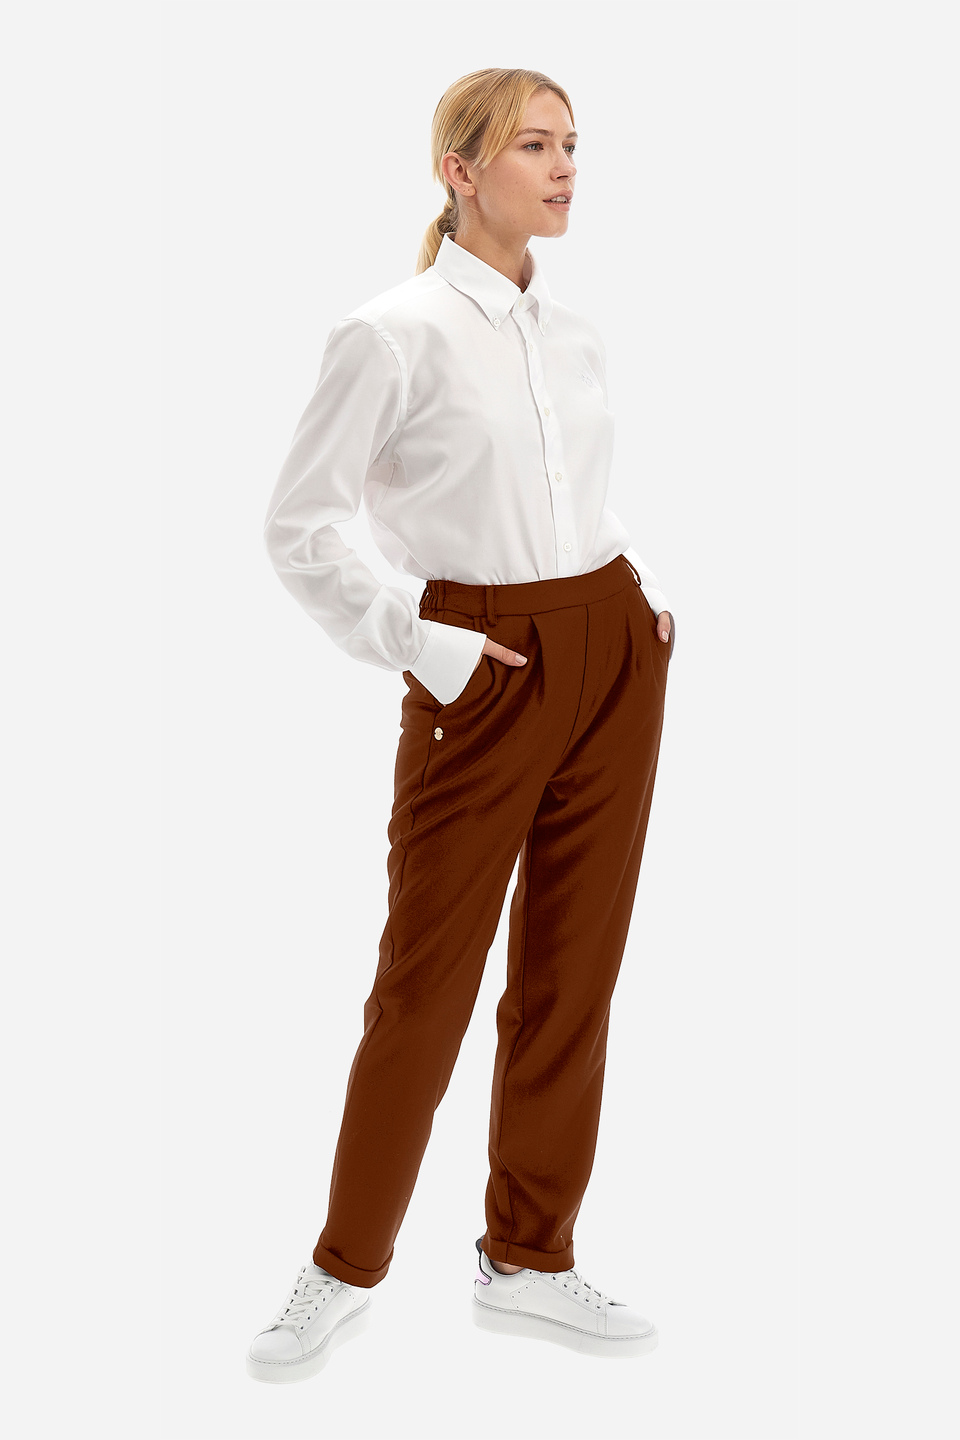 Women's trousers in a regular fit - Willena | La Martina - Official Online Shop